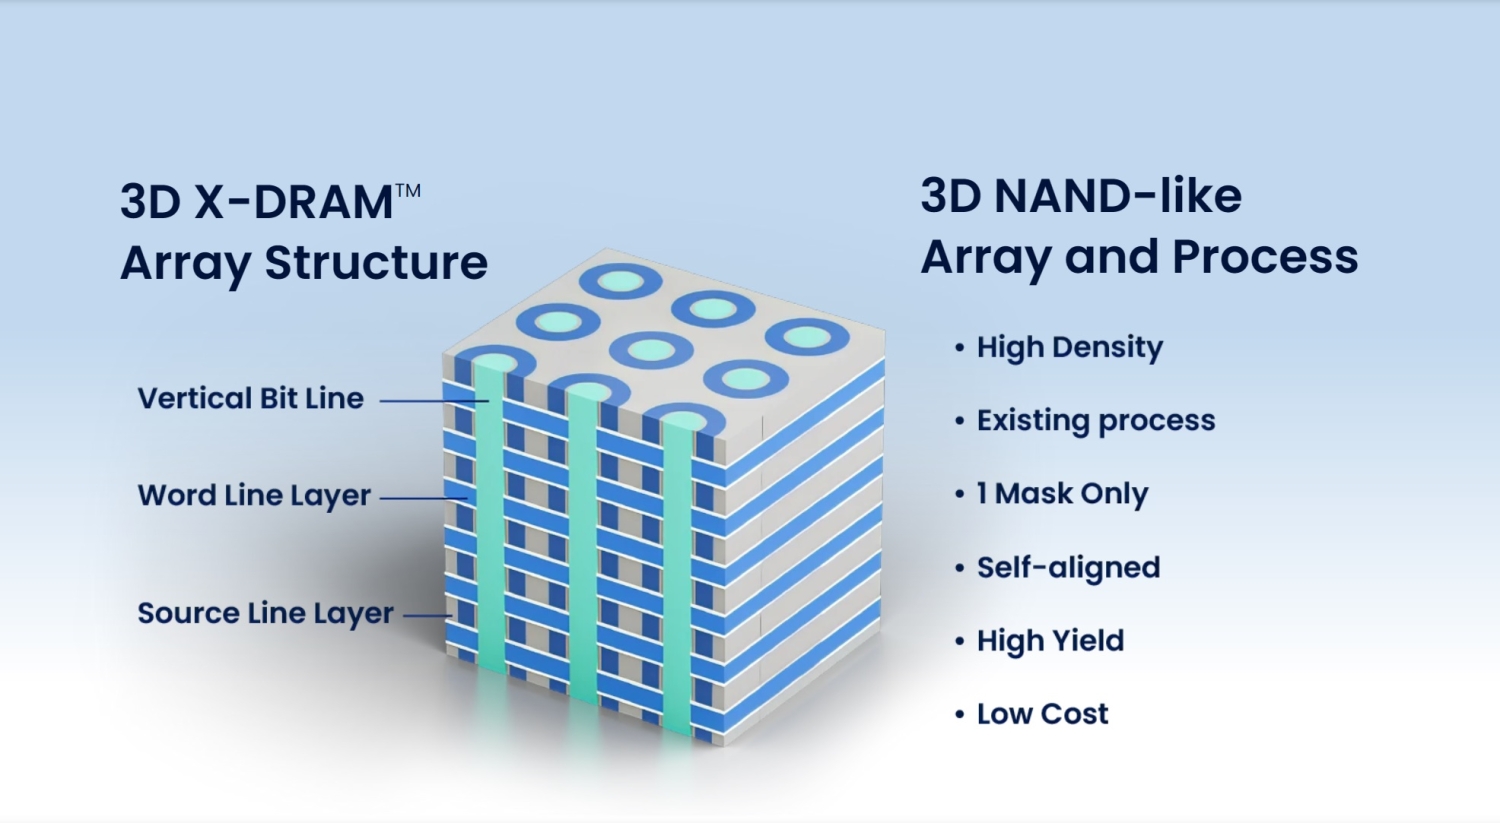 TweakTown Enlarged Image - 3D X-DRAM from NEO Semiconductor, image credit: NEO Semiconductor.